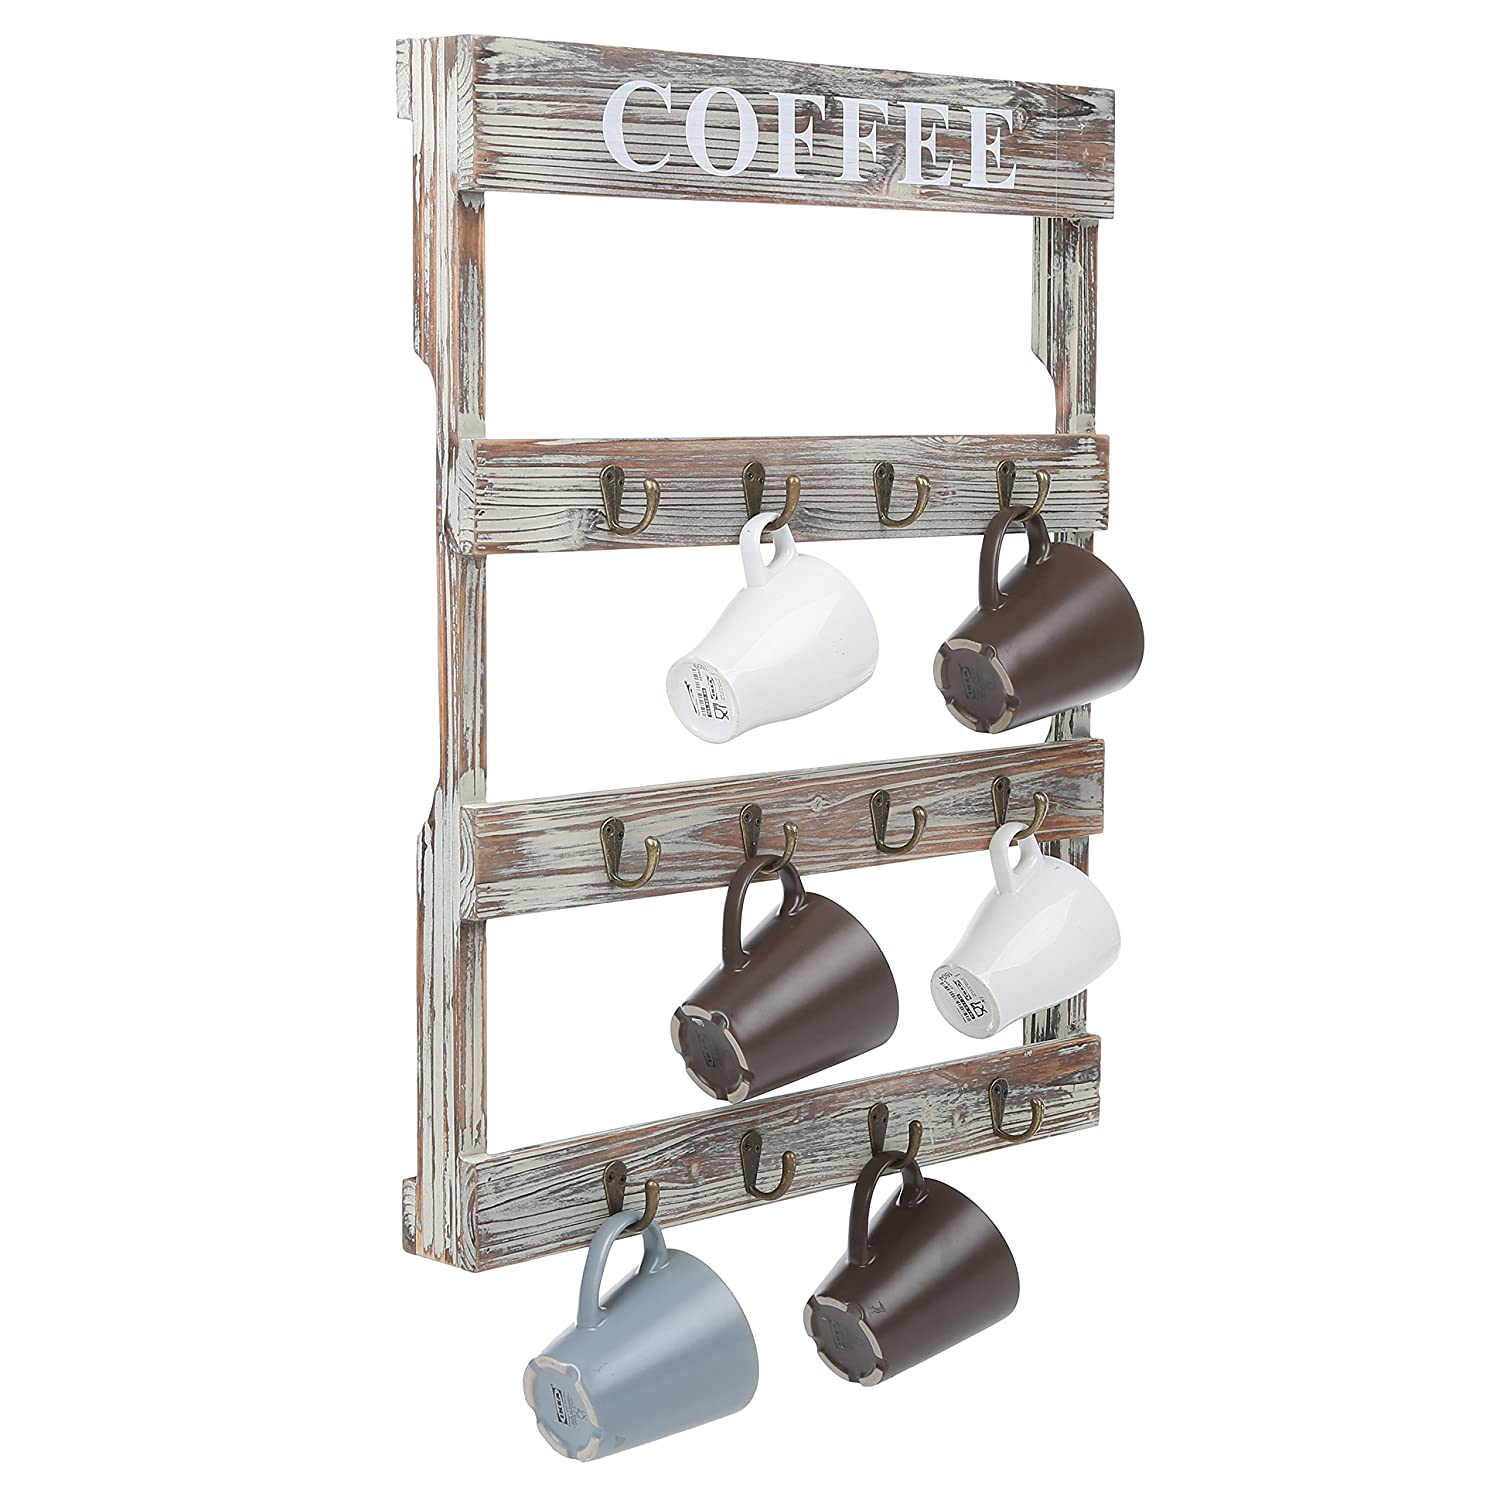 White whale Wall-Mounted Wooded Coffee Mug Holder, Kitchen Storage Rac –  Whitewhale